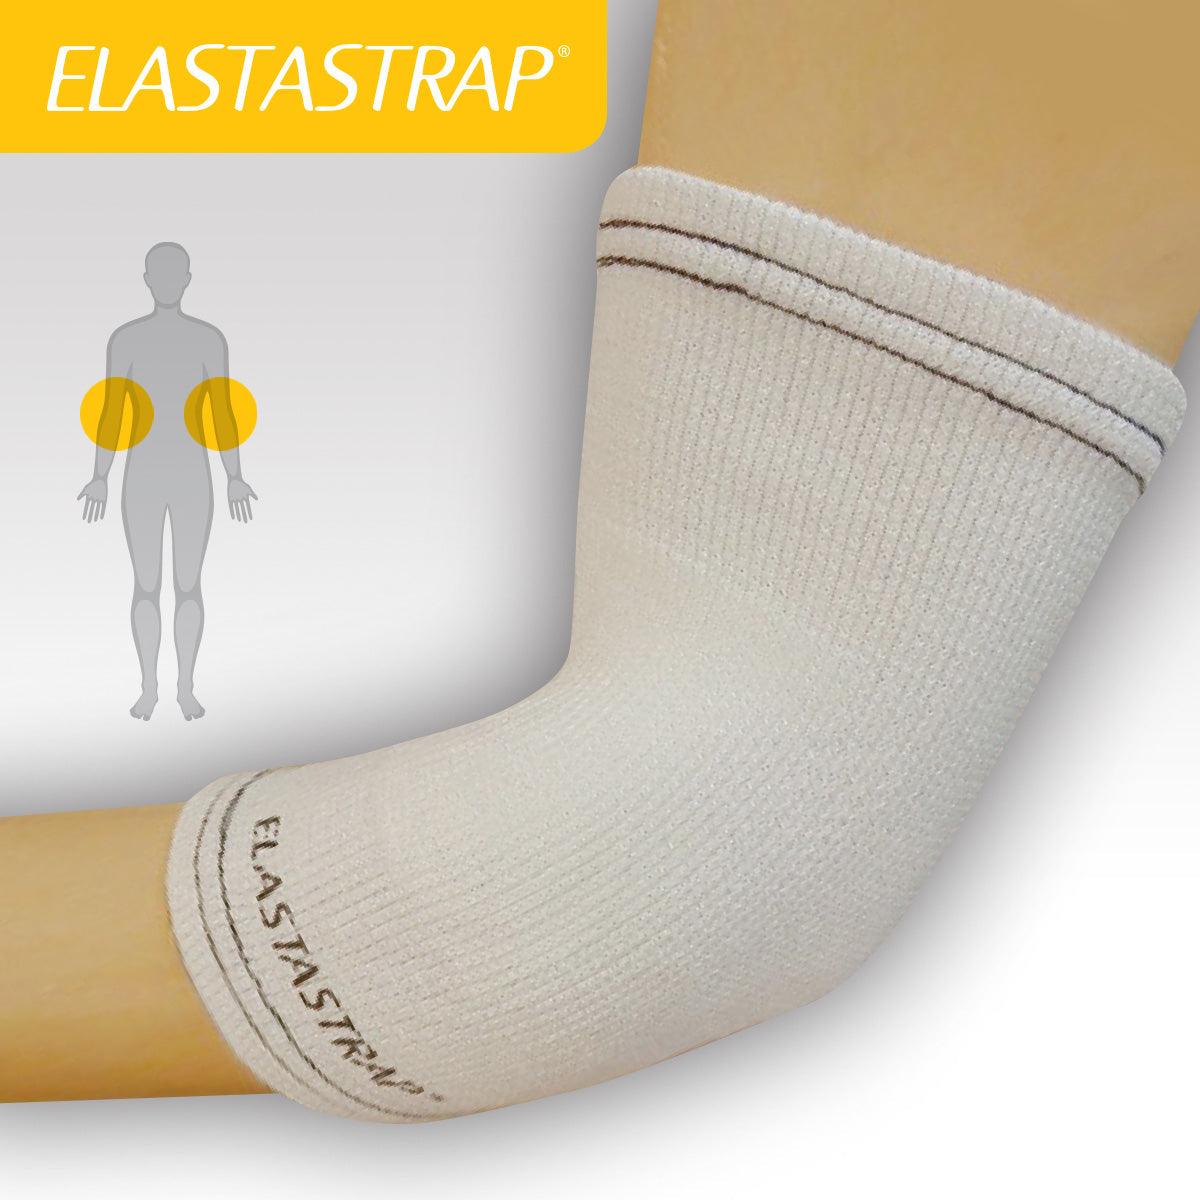 Elastastrap Compression Elbow Support